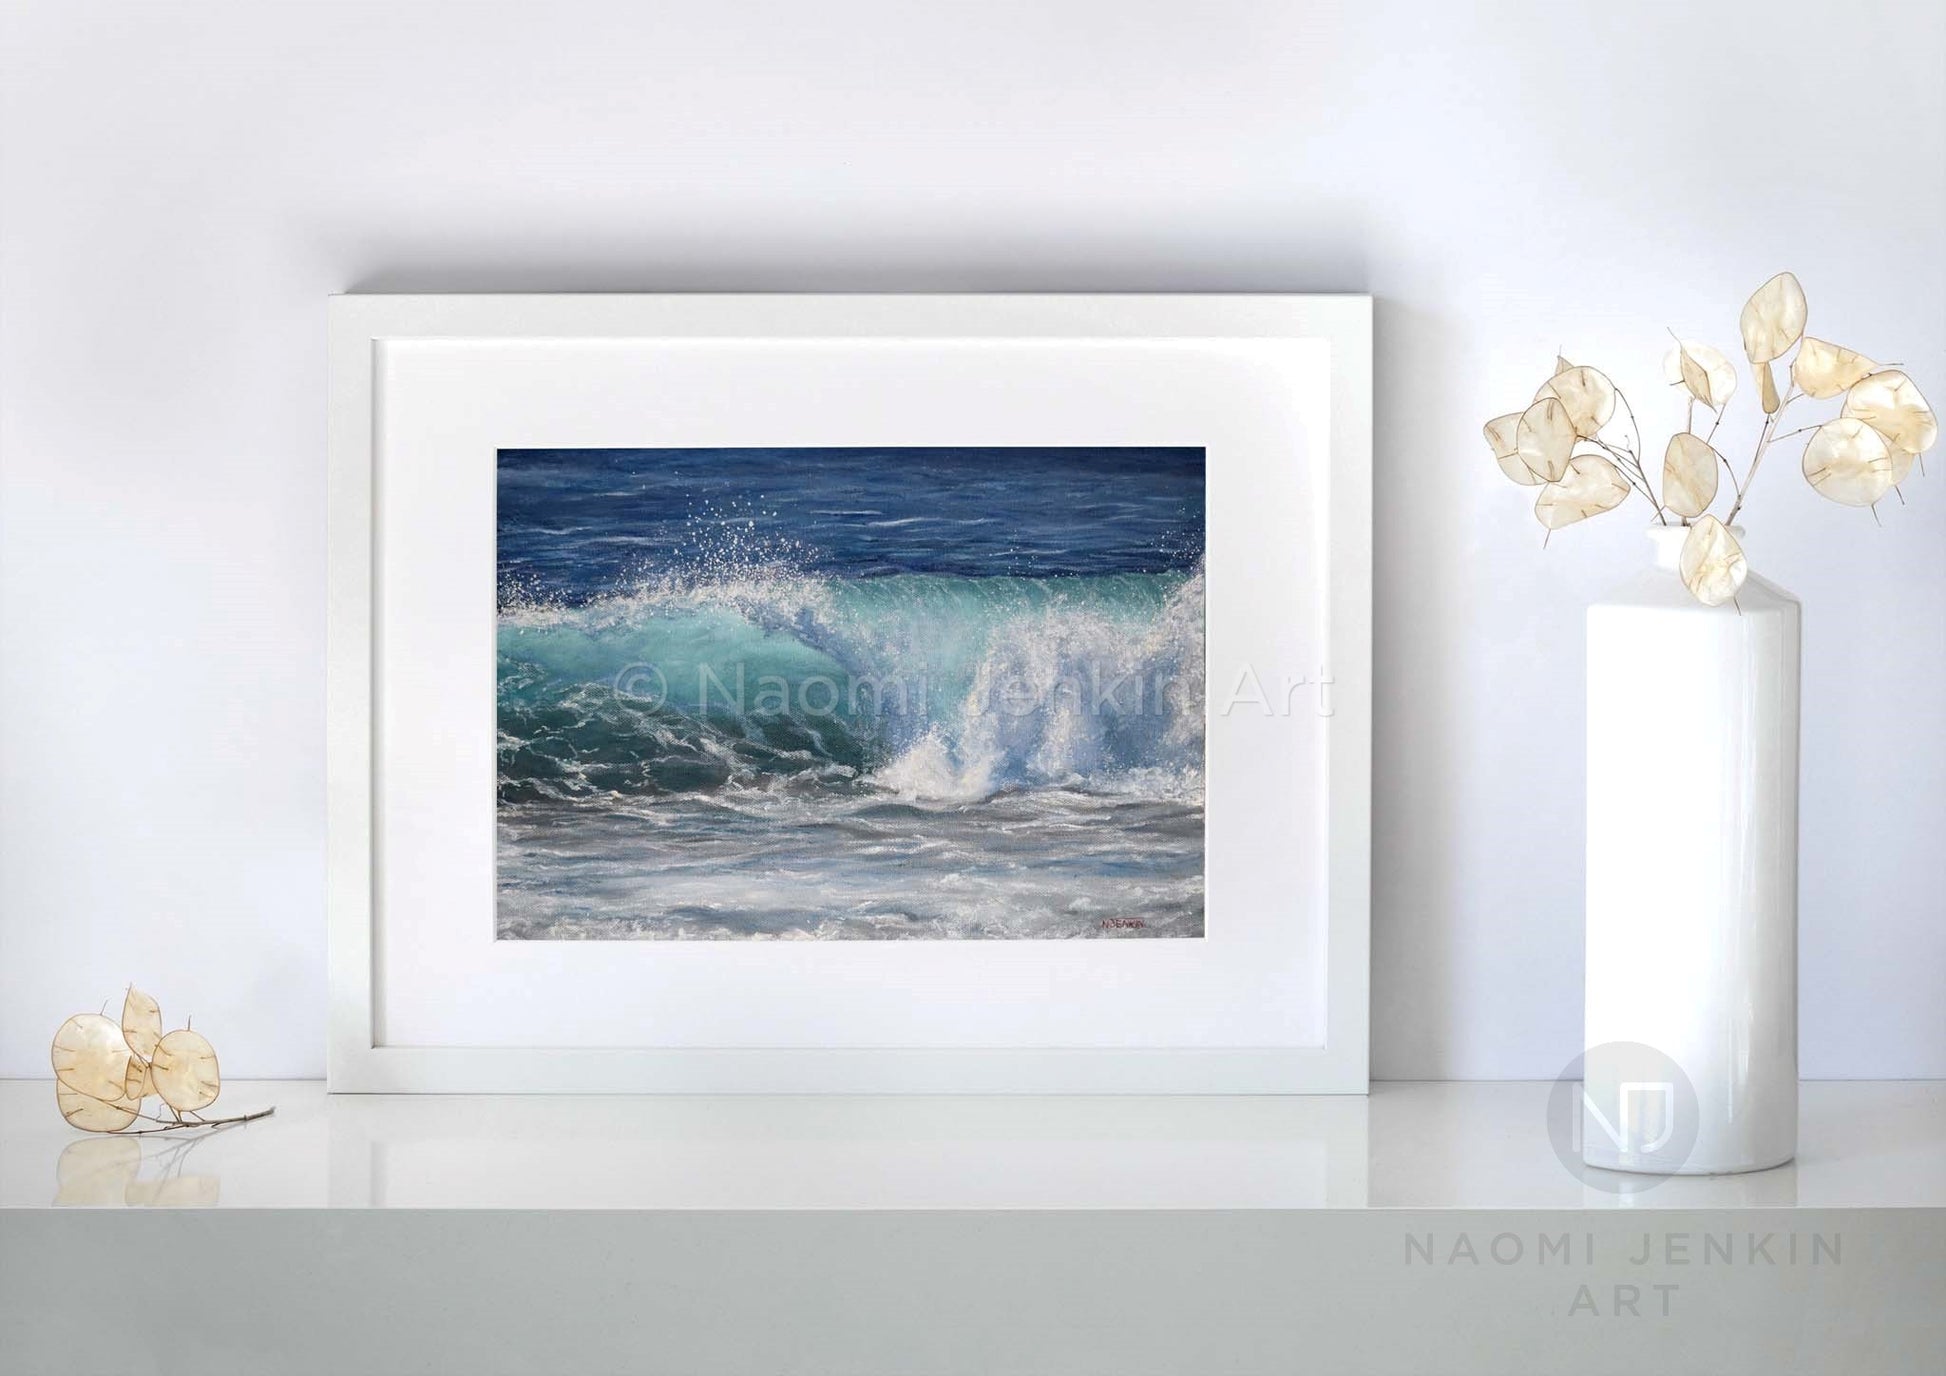 Framed wave art print 'Summer Beachbreak' by seascape artist Naomi Jenkin on a shelf setting